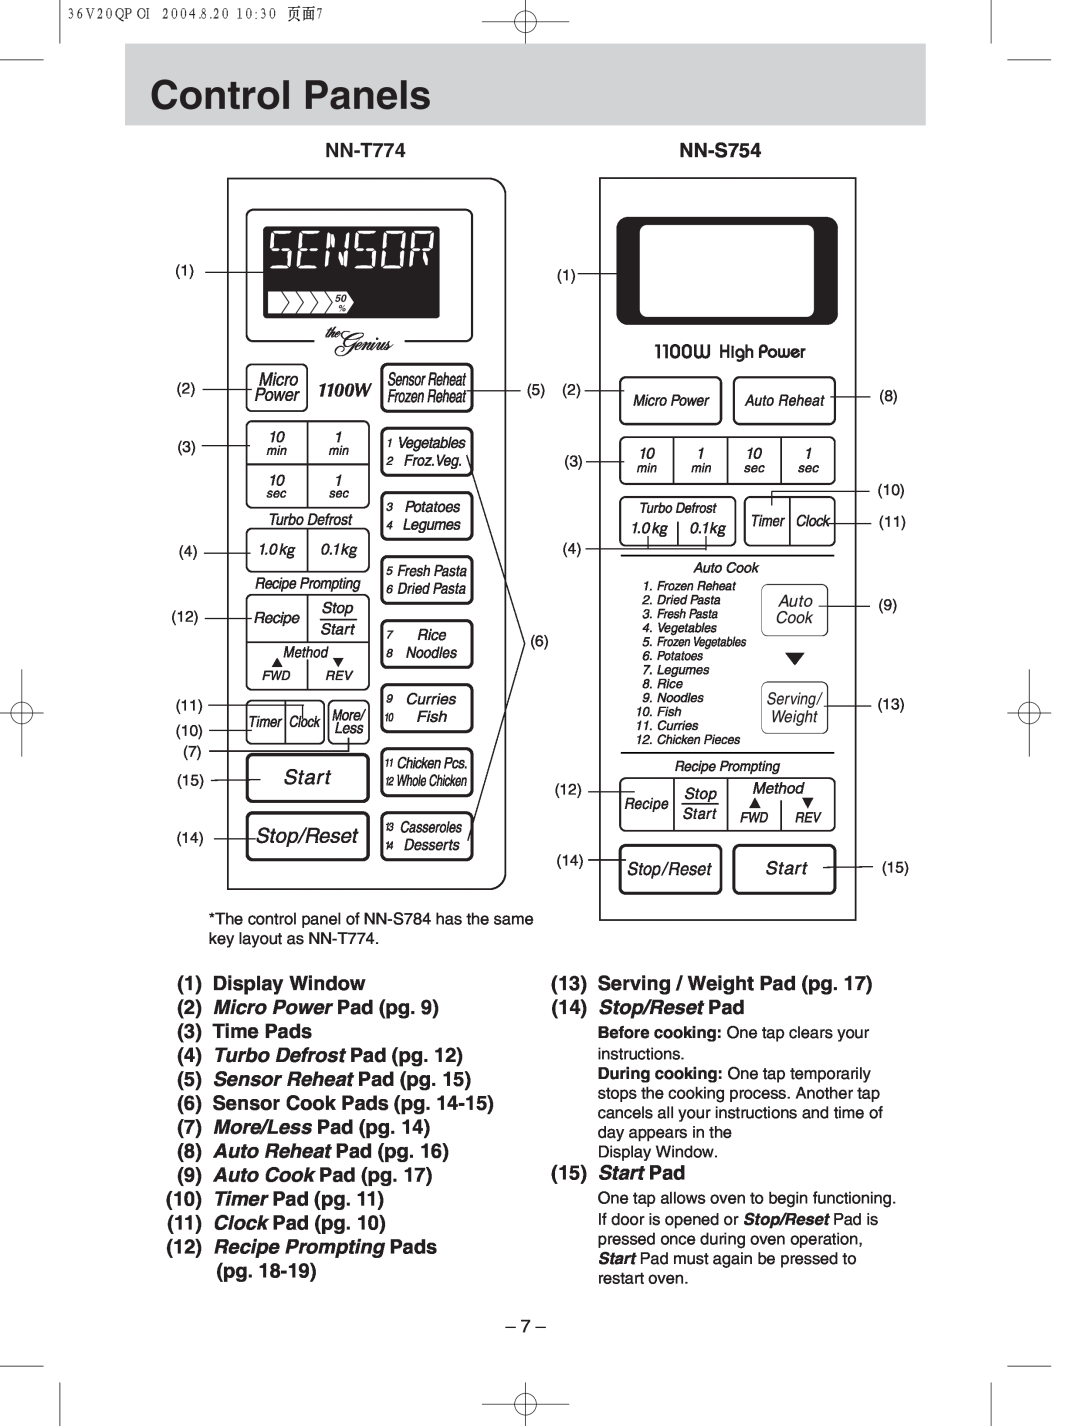 Panasonic NN-S784 NN-T774, NN-S754, Display Window, Micro Power Pad pg, Time Pads, Sensor Cook Pads pg 7 More/Less Pad pg 